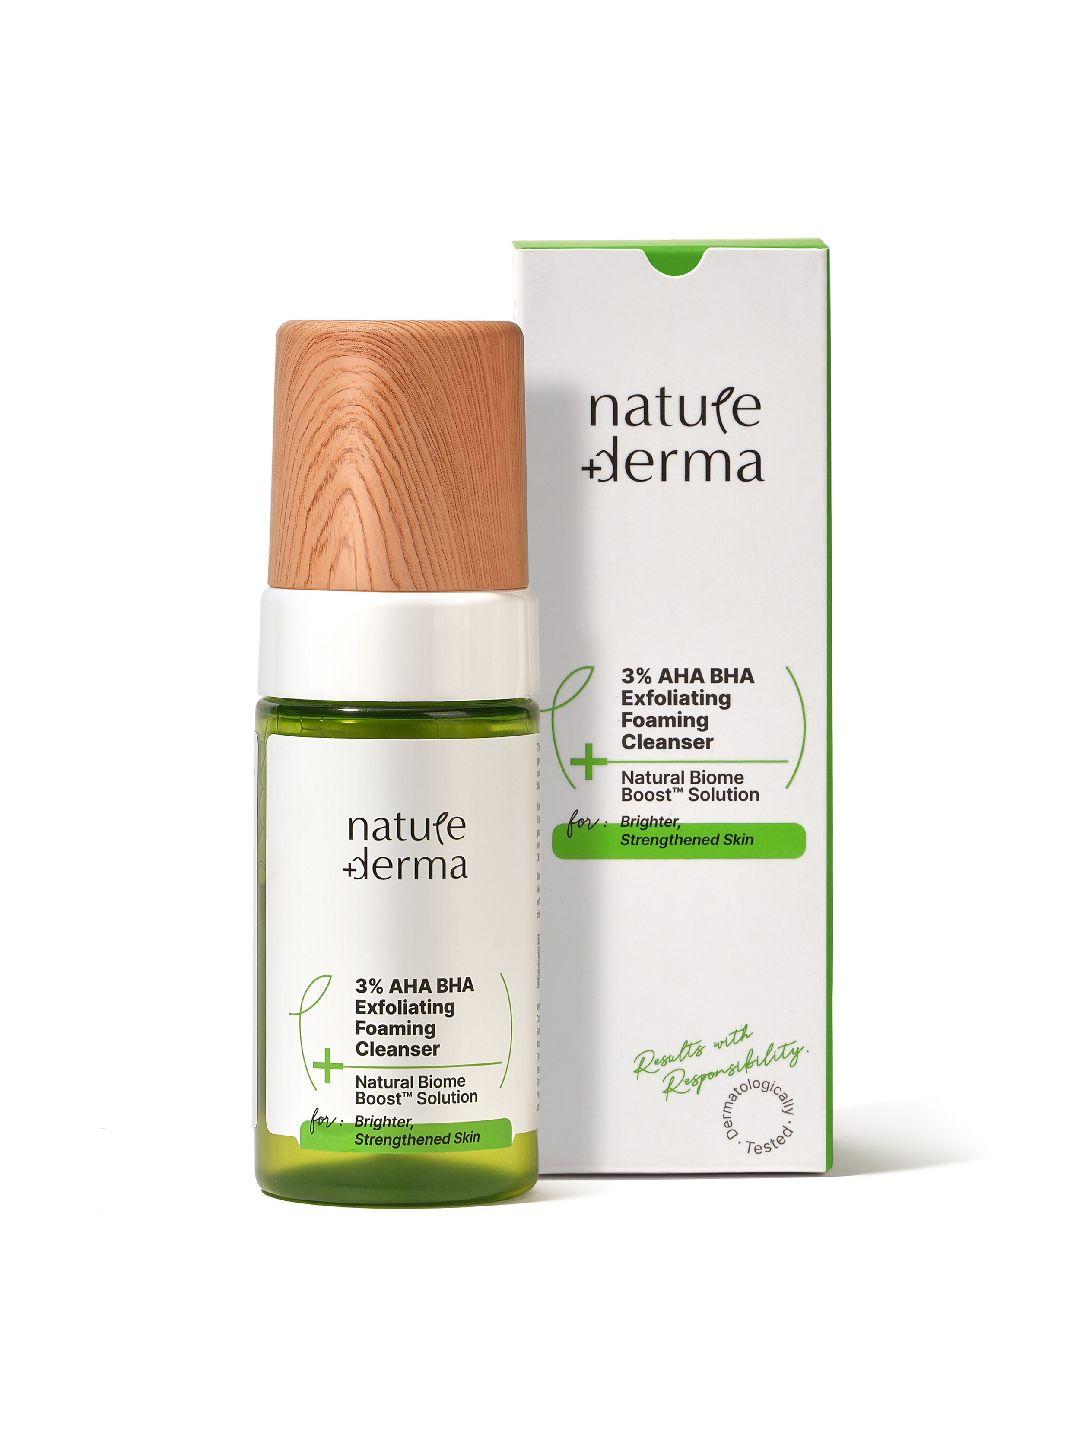 nature derma natural biome boost solution 3% aha bha exfoliating foaming cleanser - 100ml